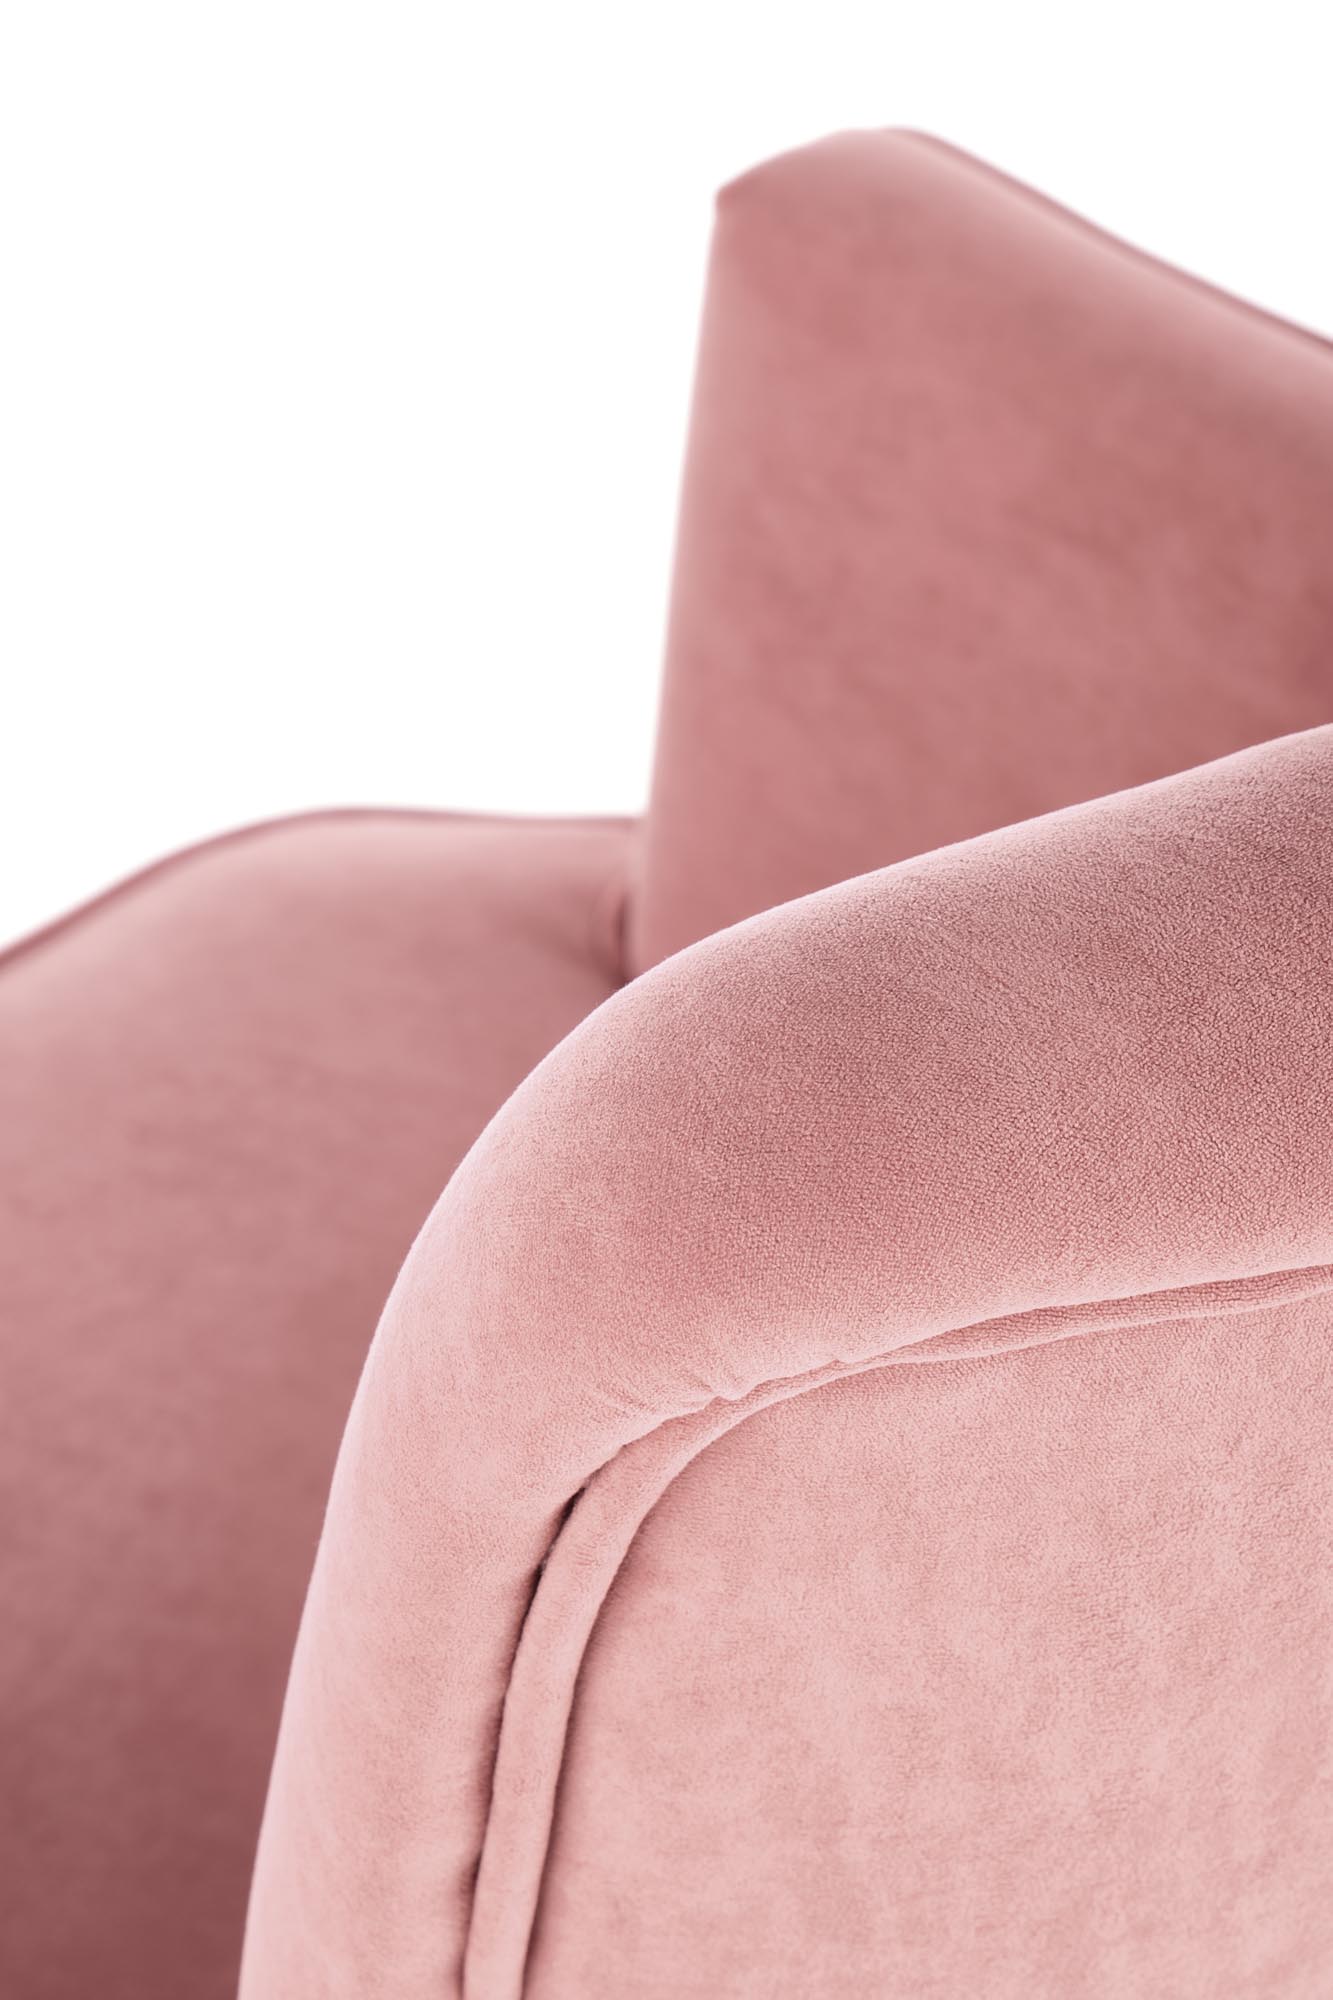 DELGADO fotel - rózsaszín delgado Křeslo Růžová